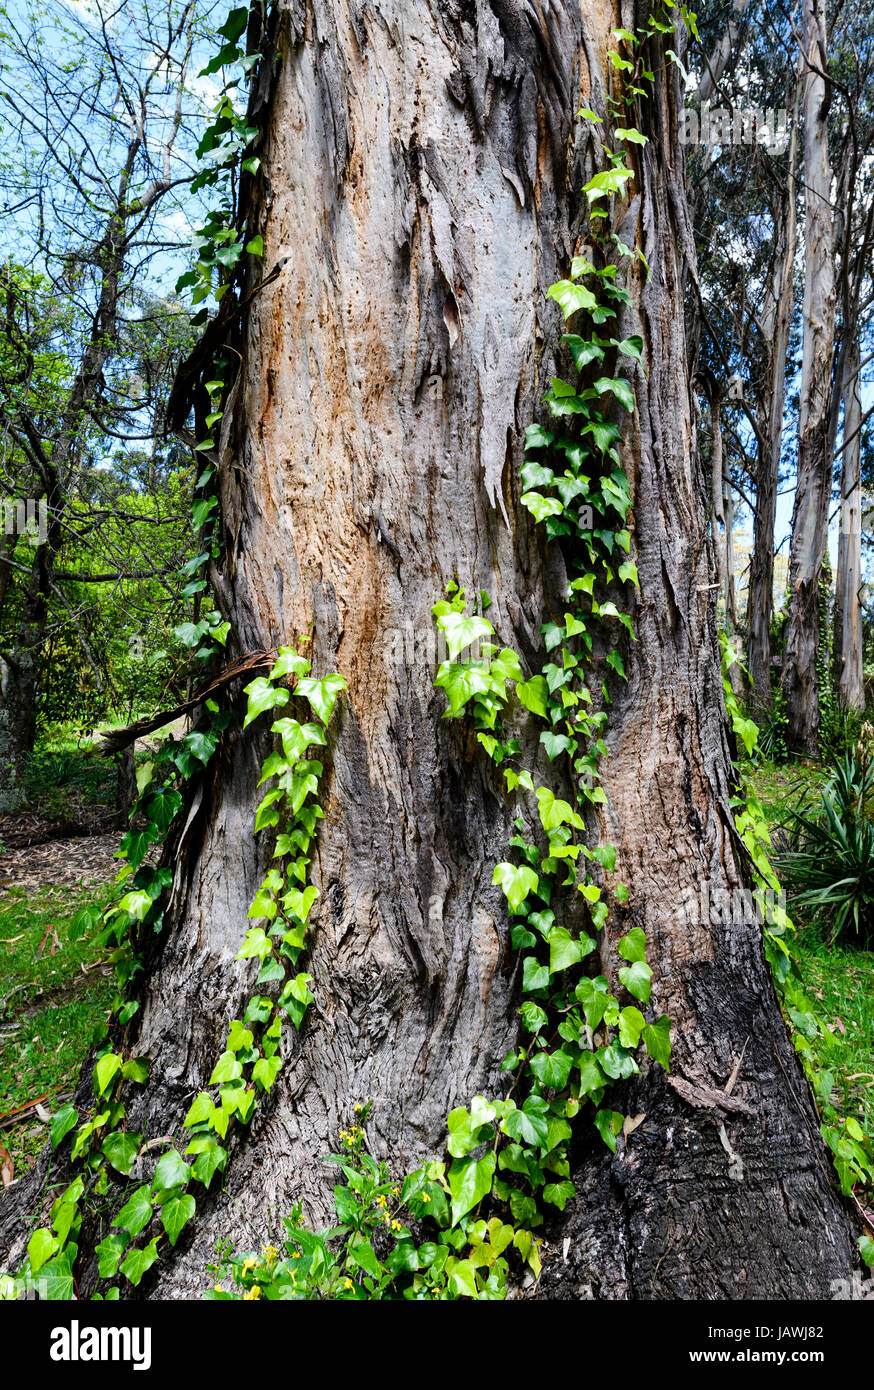 Common Ivy vine growing up a eucalyptus tree trunk. Stock Photo